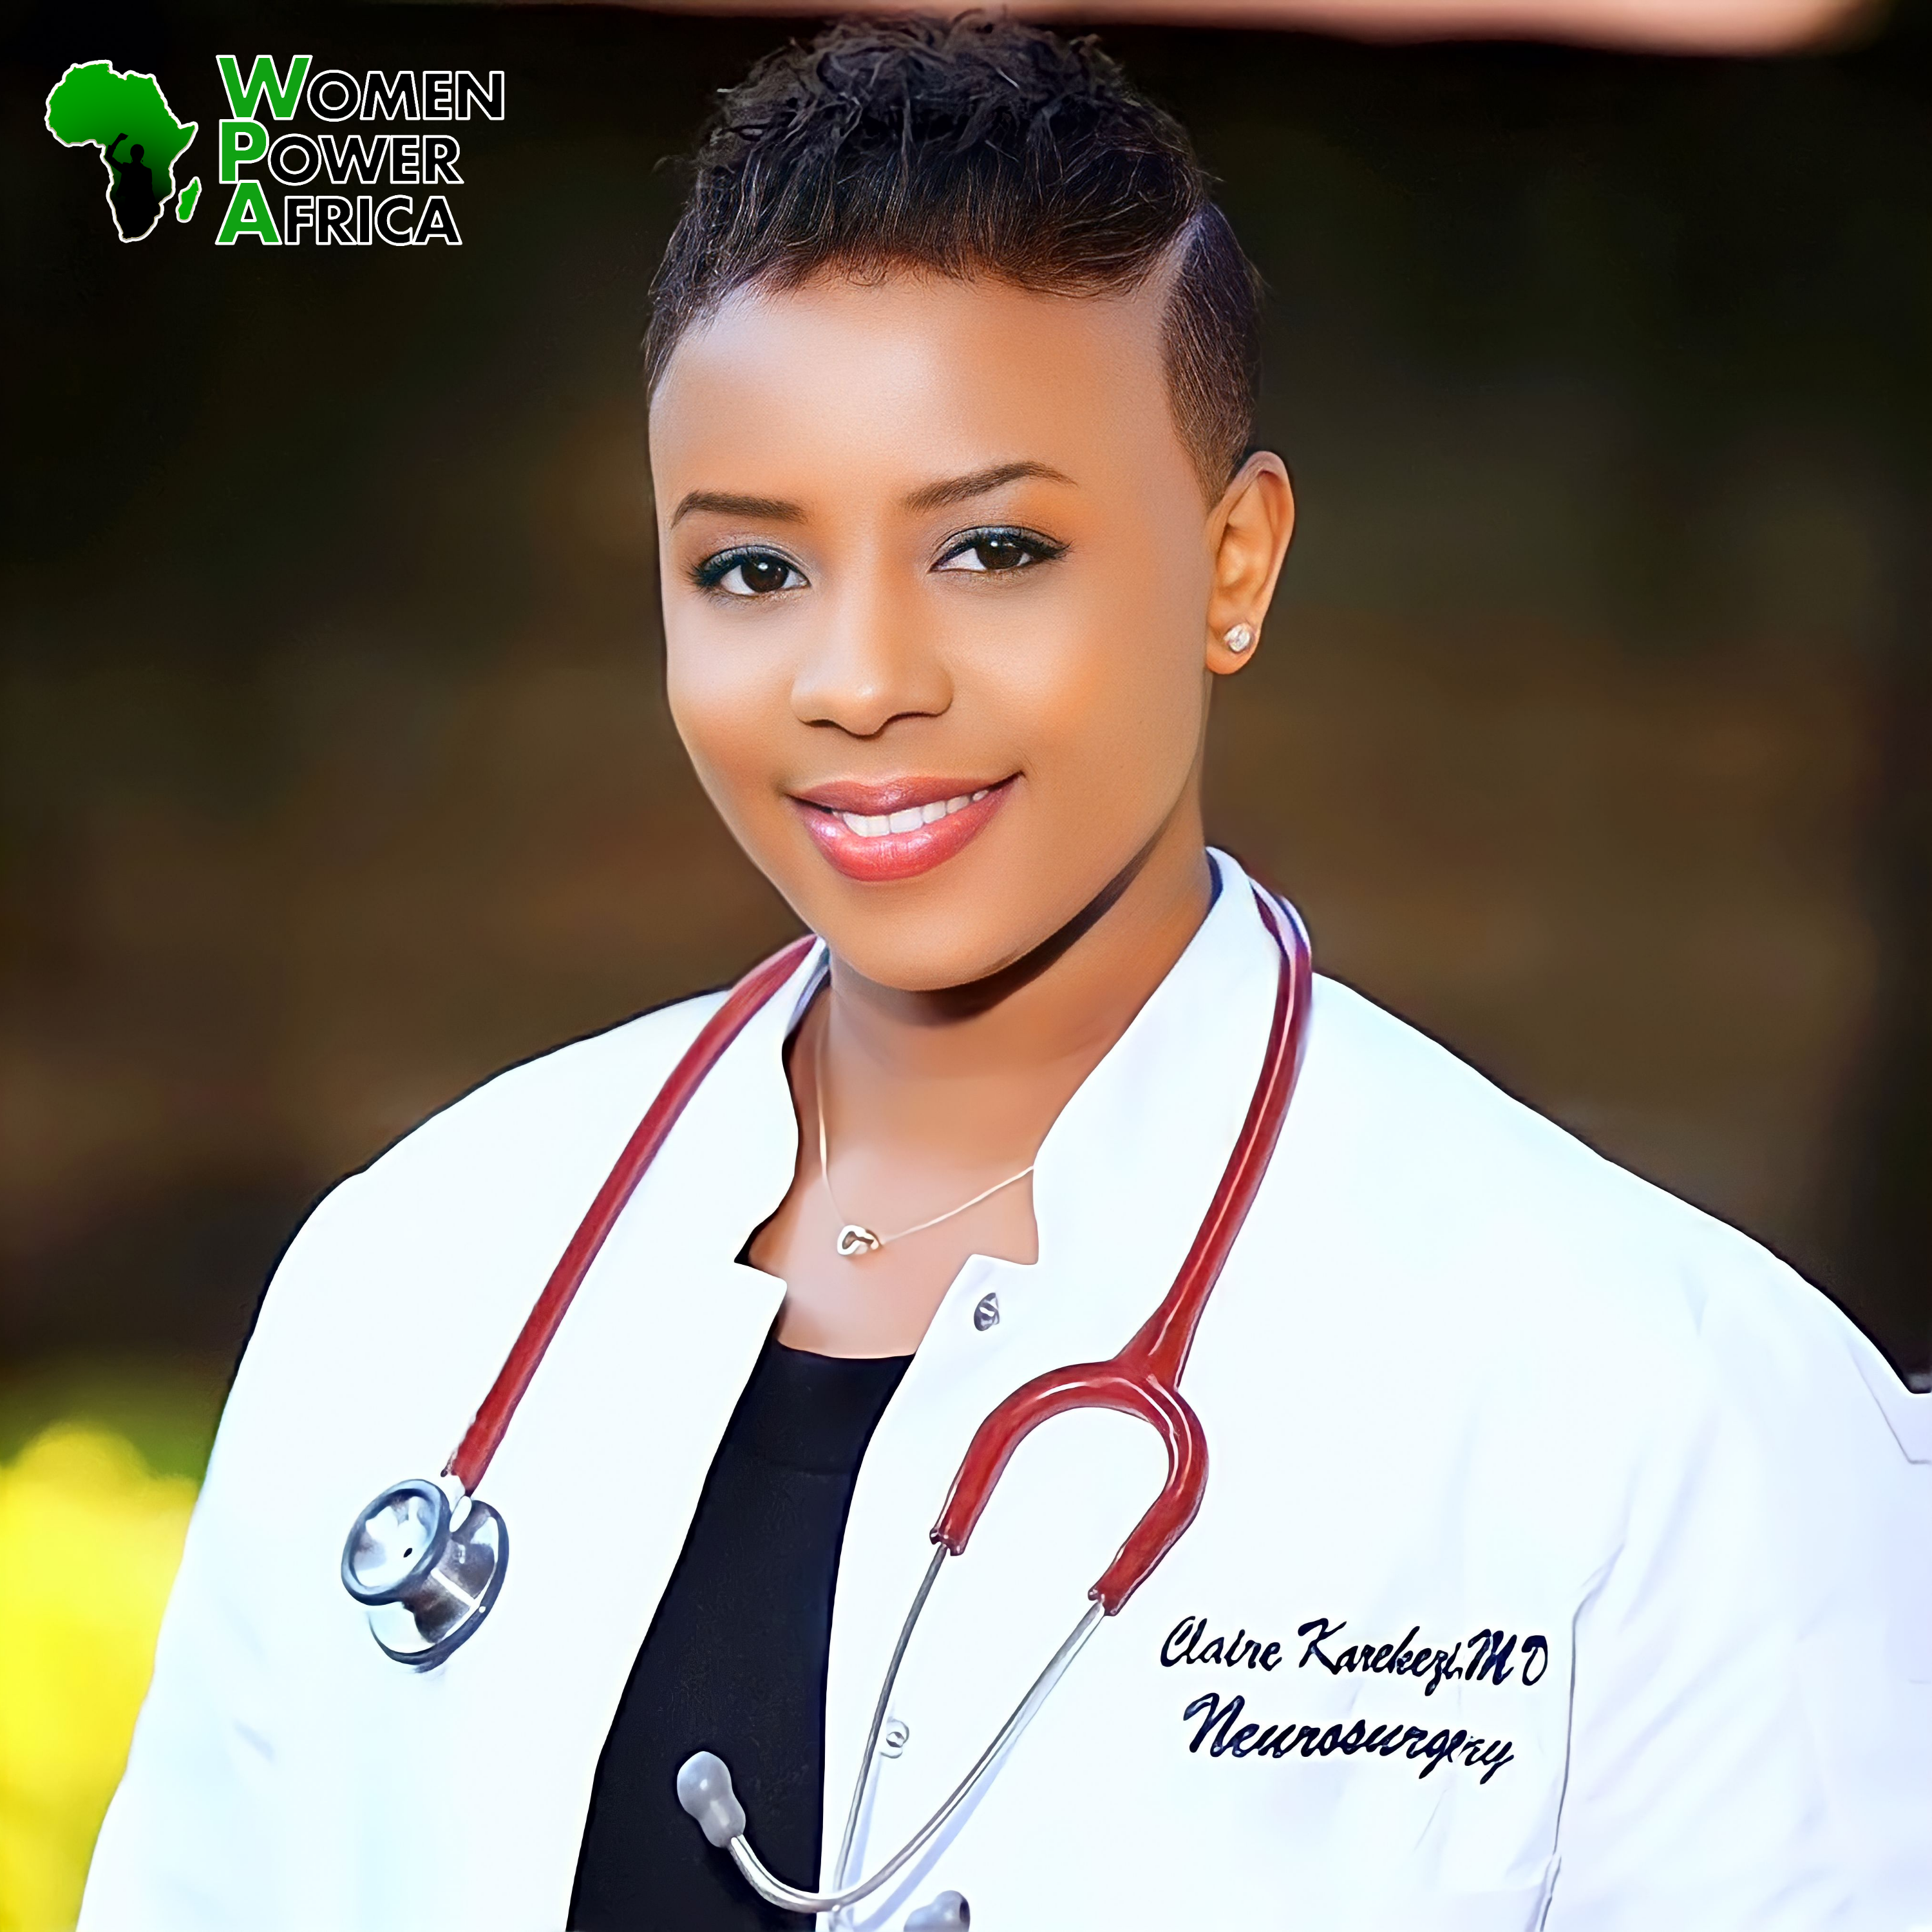 Dr. Claire Karekezi: The Remarkable Neurosurgeon from Rwanda.